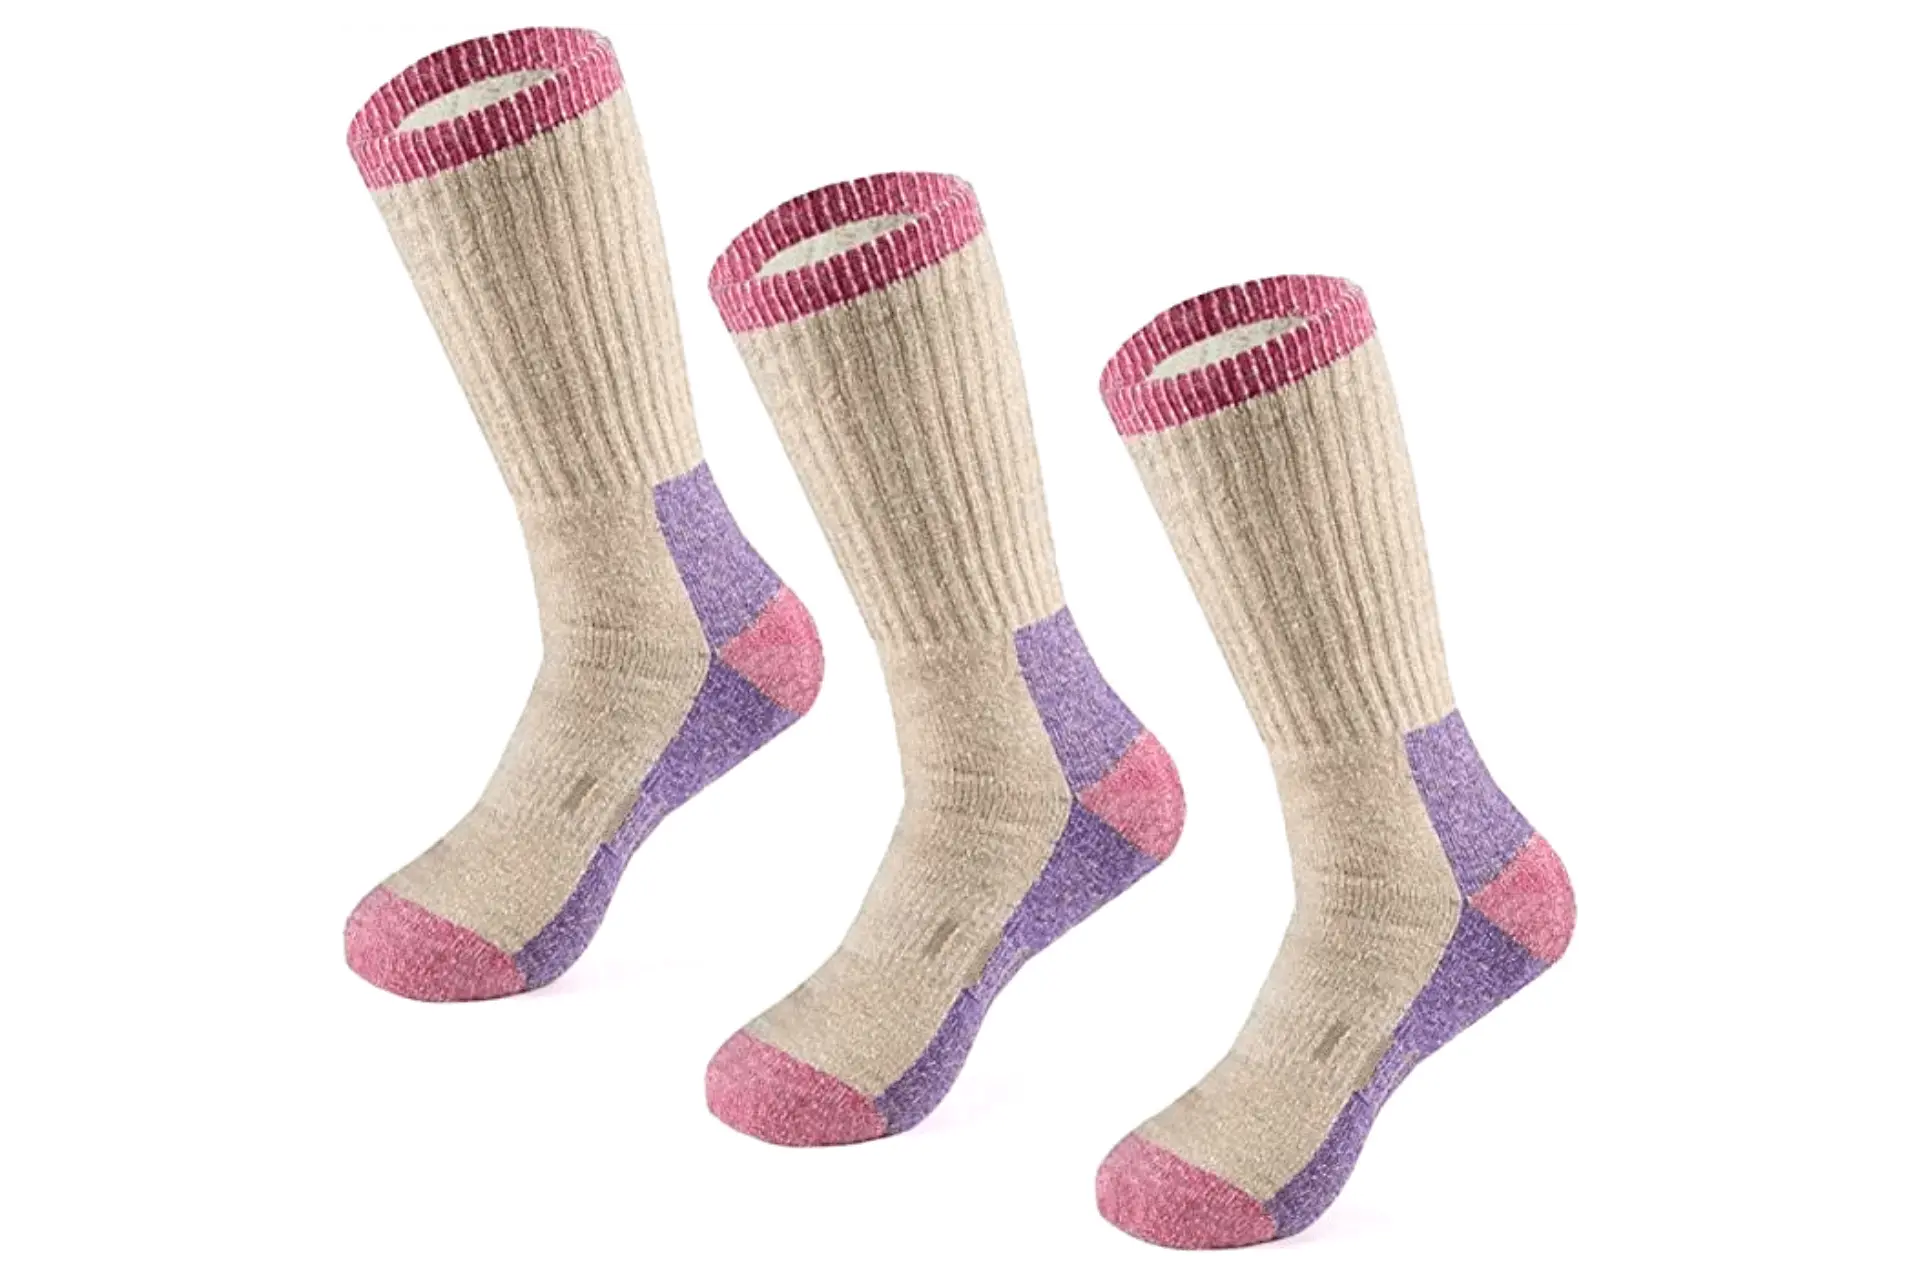 MERIWOOL Merino Wool Hiking Socks for Men